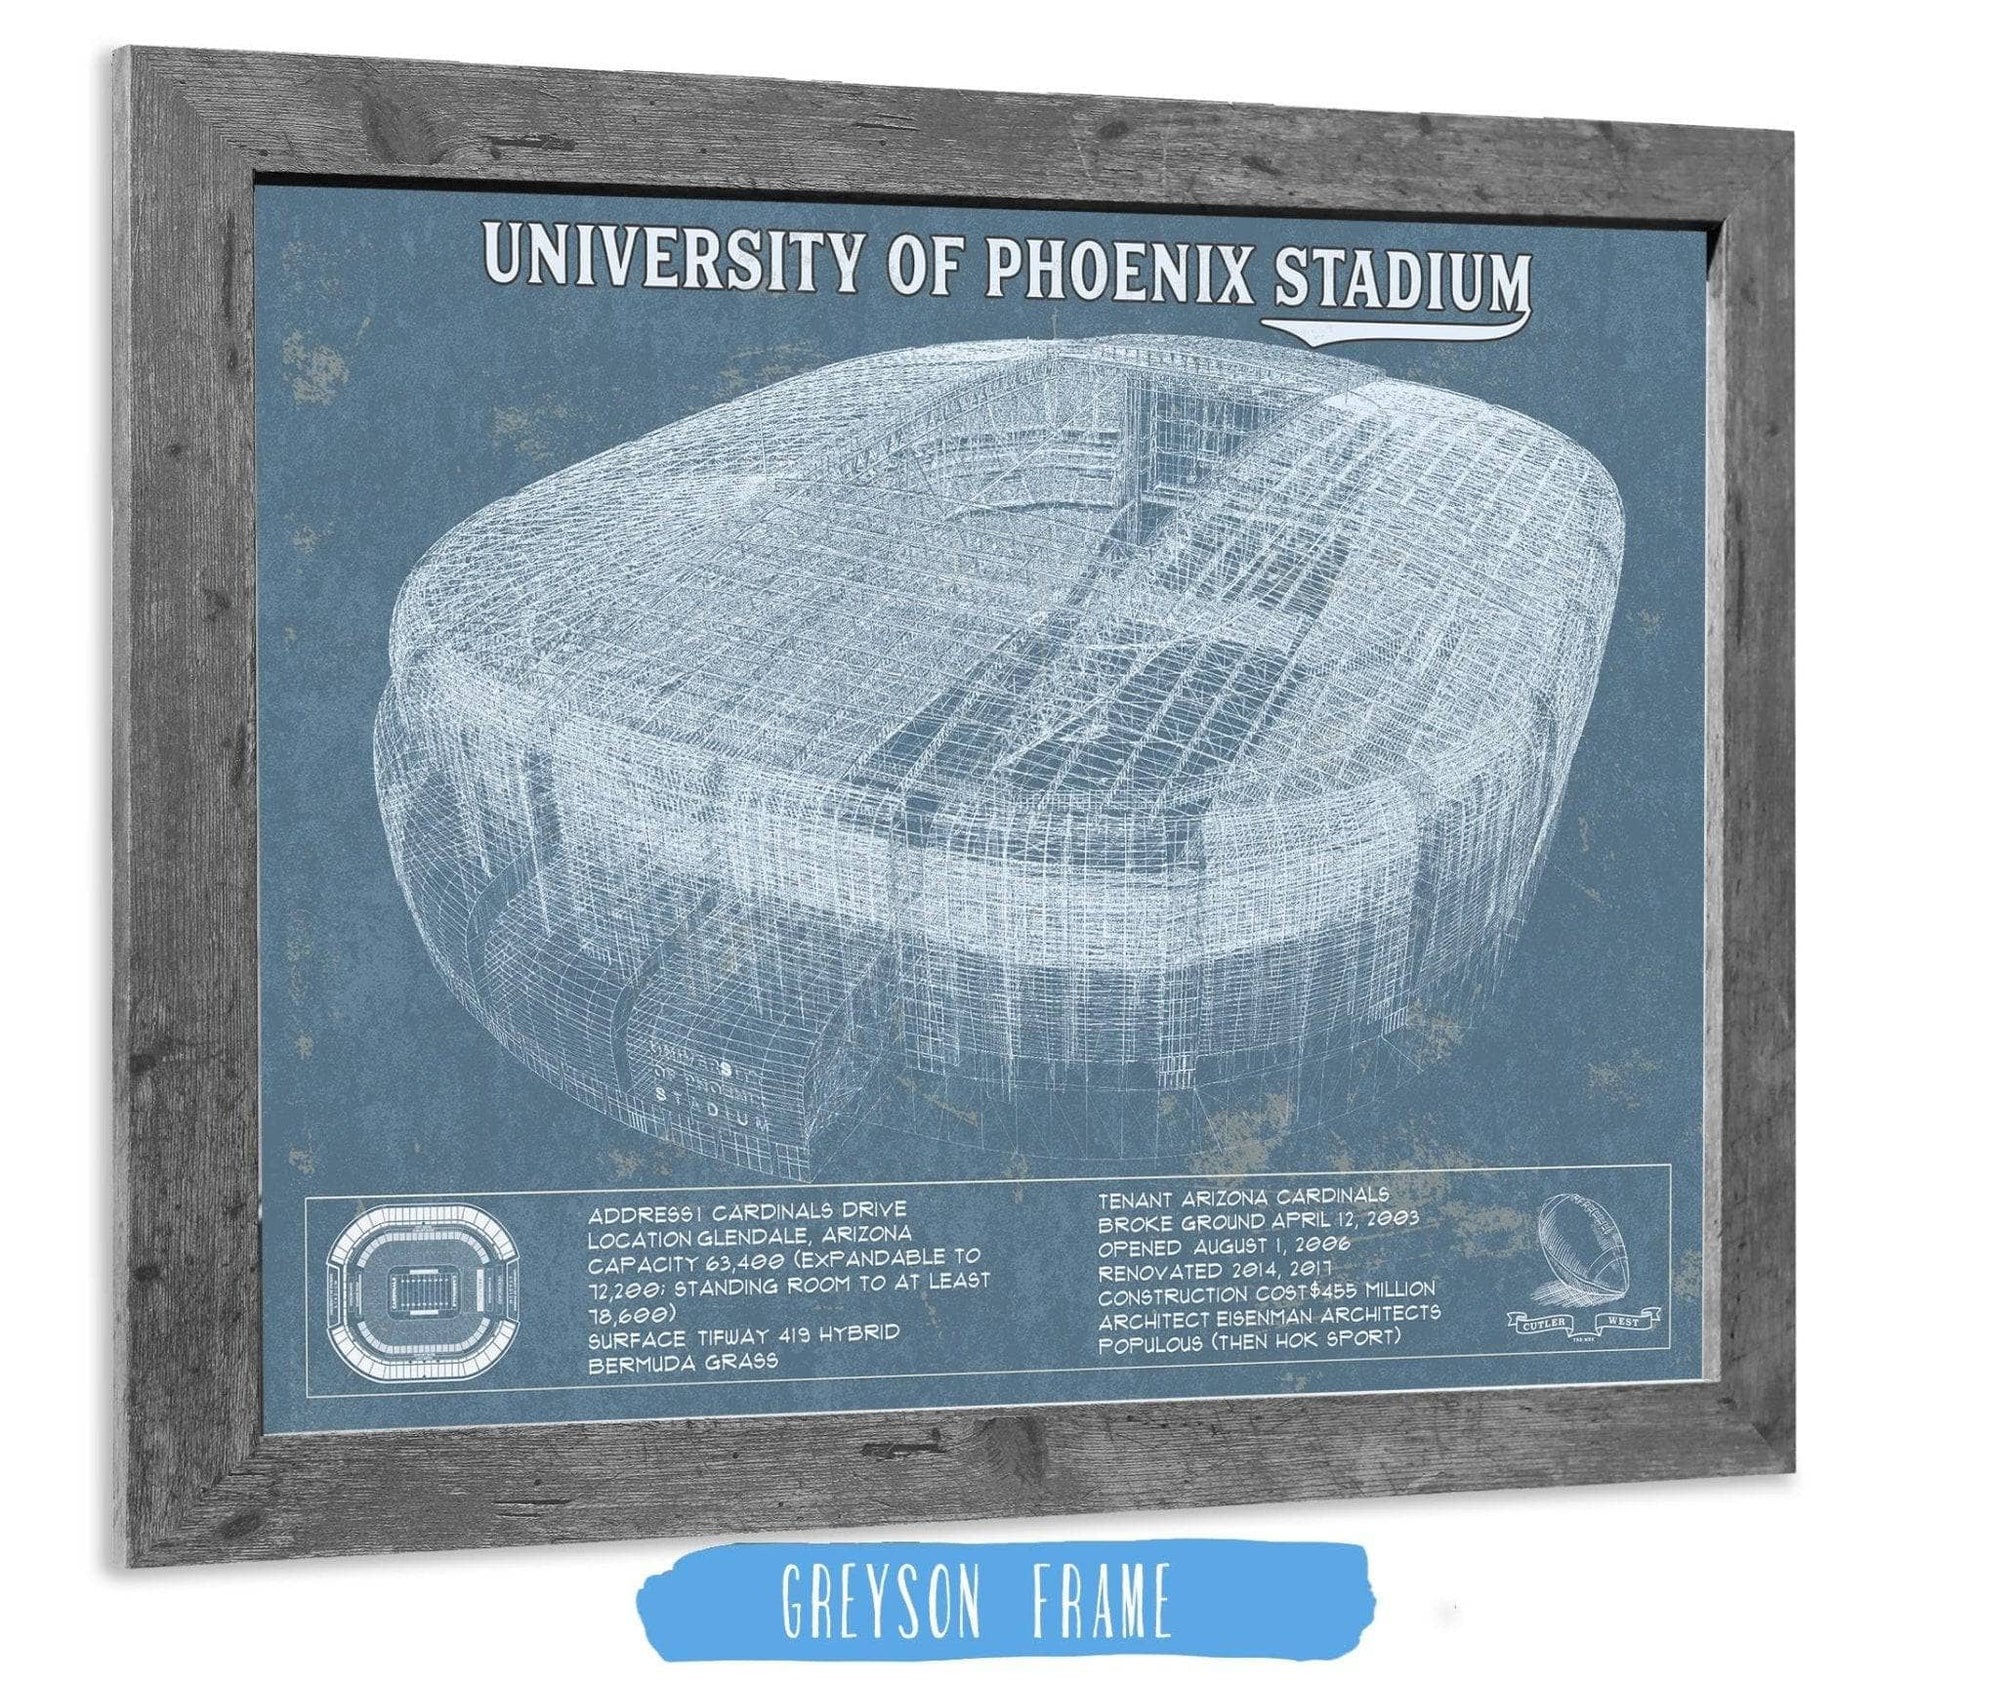 Cutler West Pro Football Collection 14" x 11" / Greyson Frame Arizona Cardinals University Of Phoenix Stadium Vintage Football Print 235353089